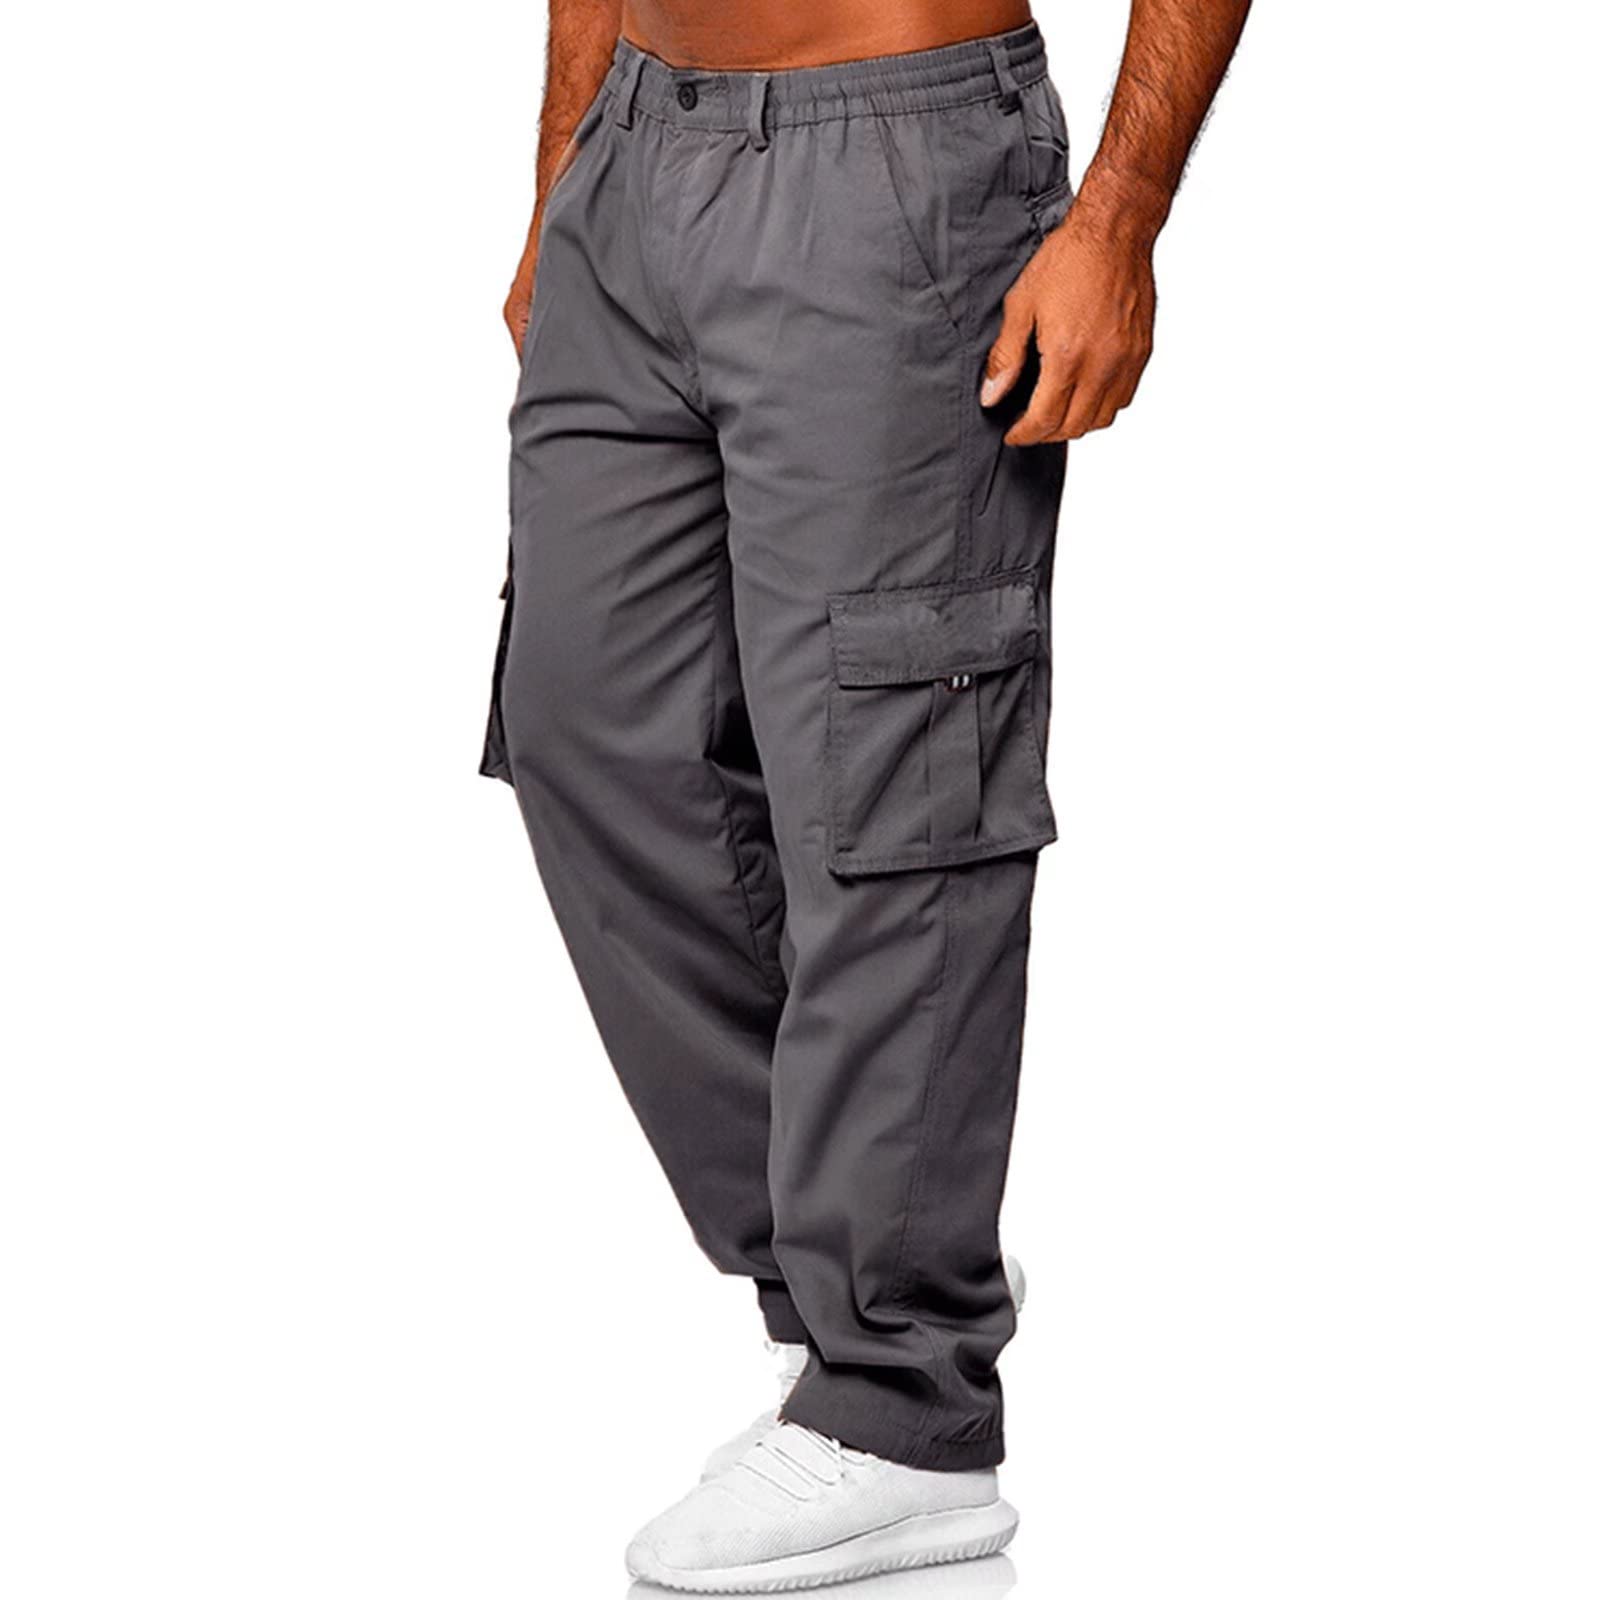 Rela Bota Men Casual Cargo Pant Lightweight Tactical Pant Hiking Jogger Classic Fit Multi Pockets XL